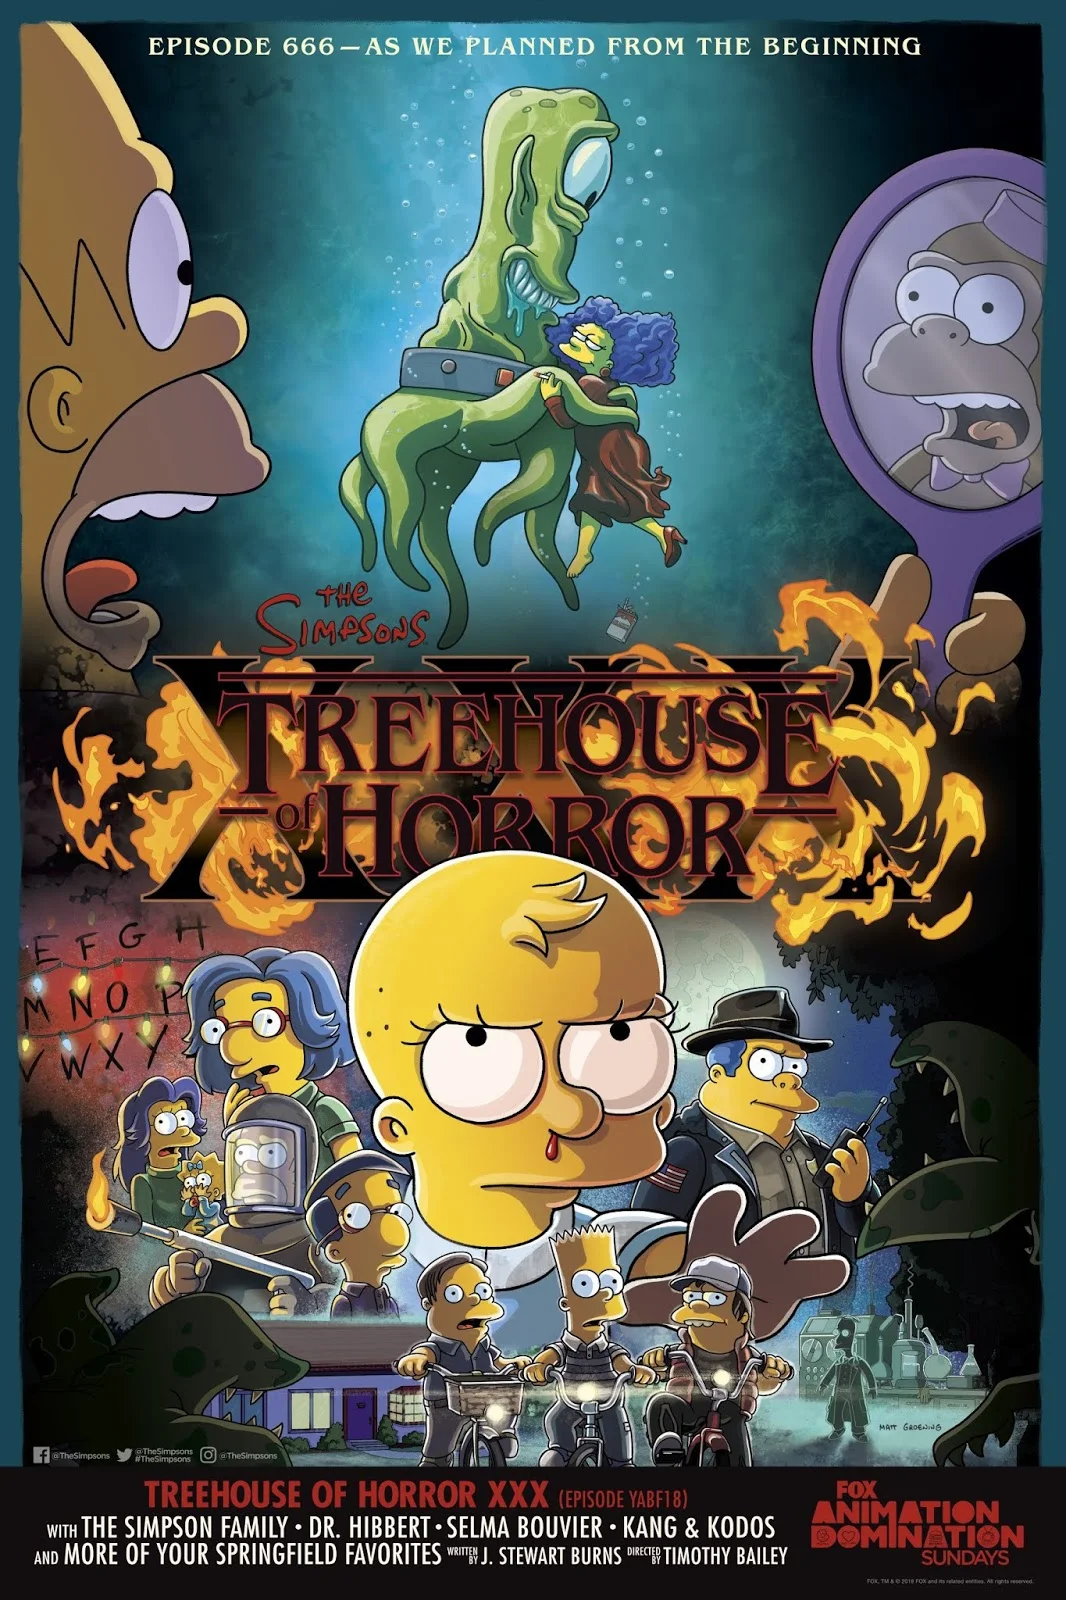 Das neuste Halloween Special der Simpsons | Treehouse of Horror 